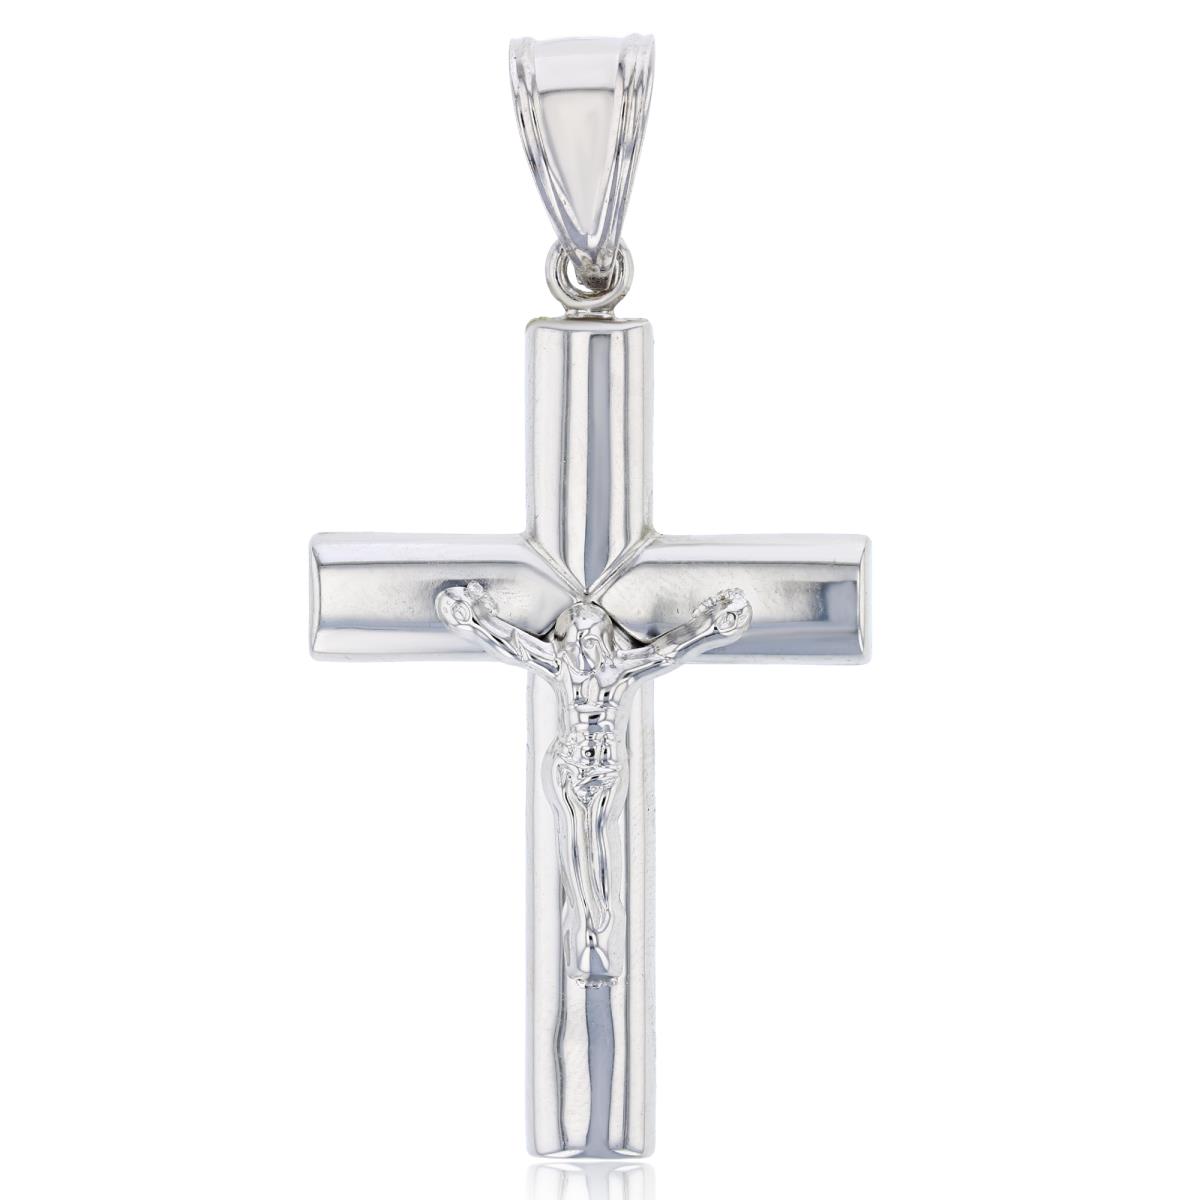 14K White Gold 62x30mm High Polished Crucifix Cross Pendant